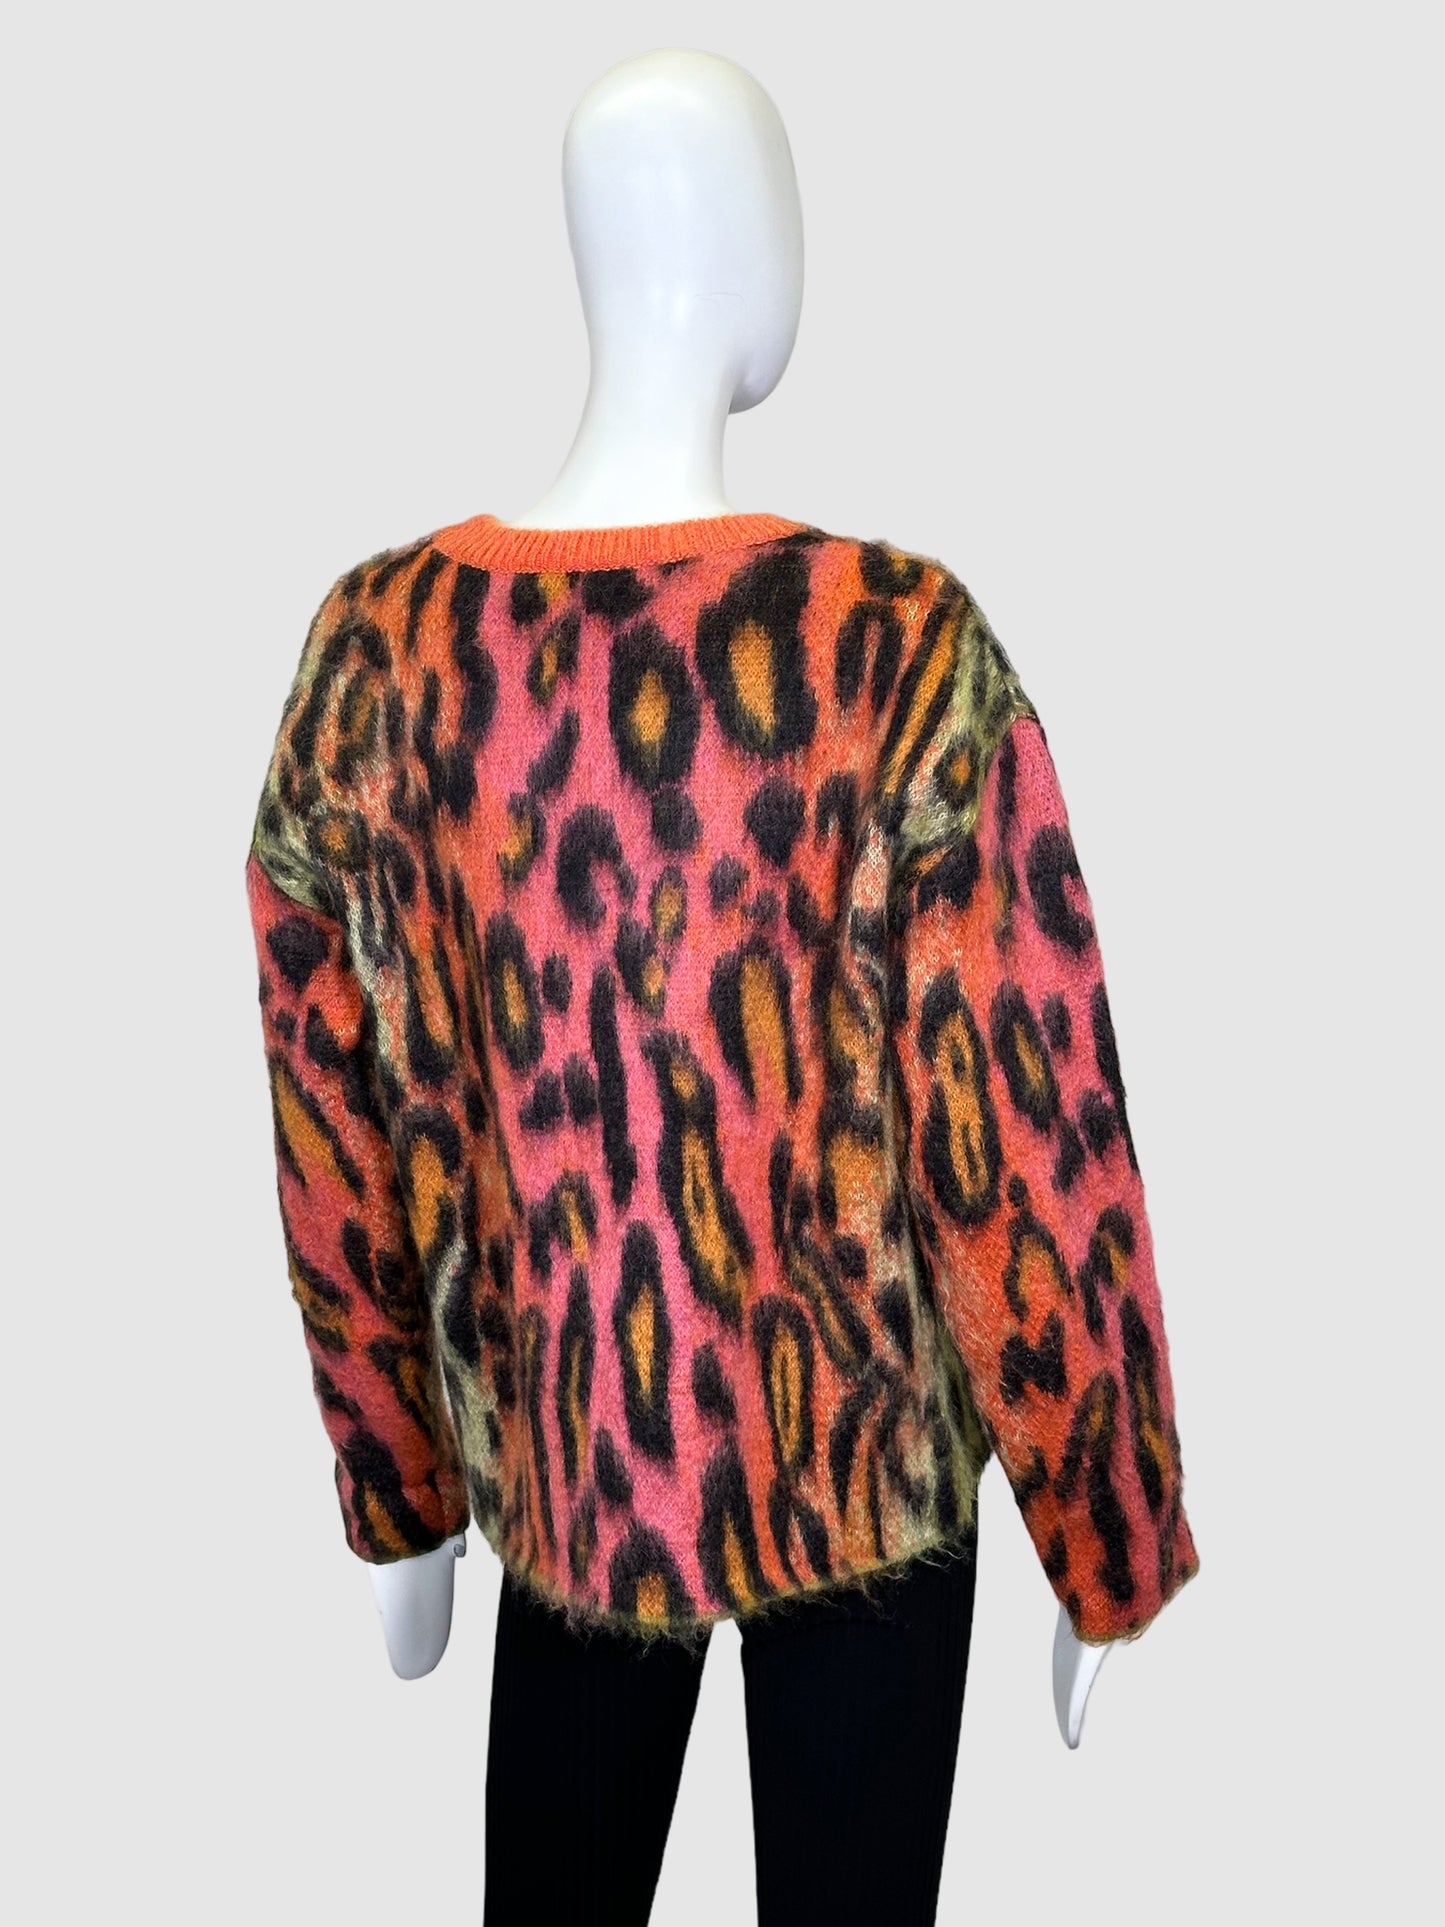 Stella McCartney Animal Print Sweater - Size 42(M)